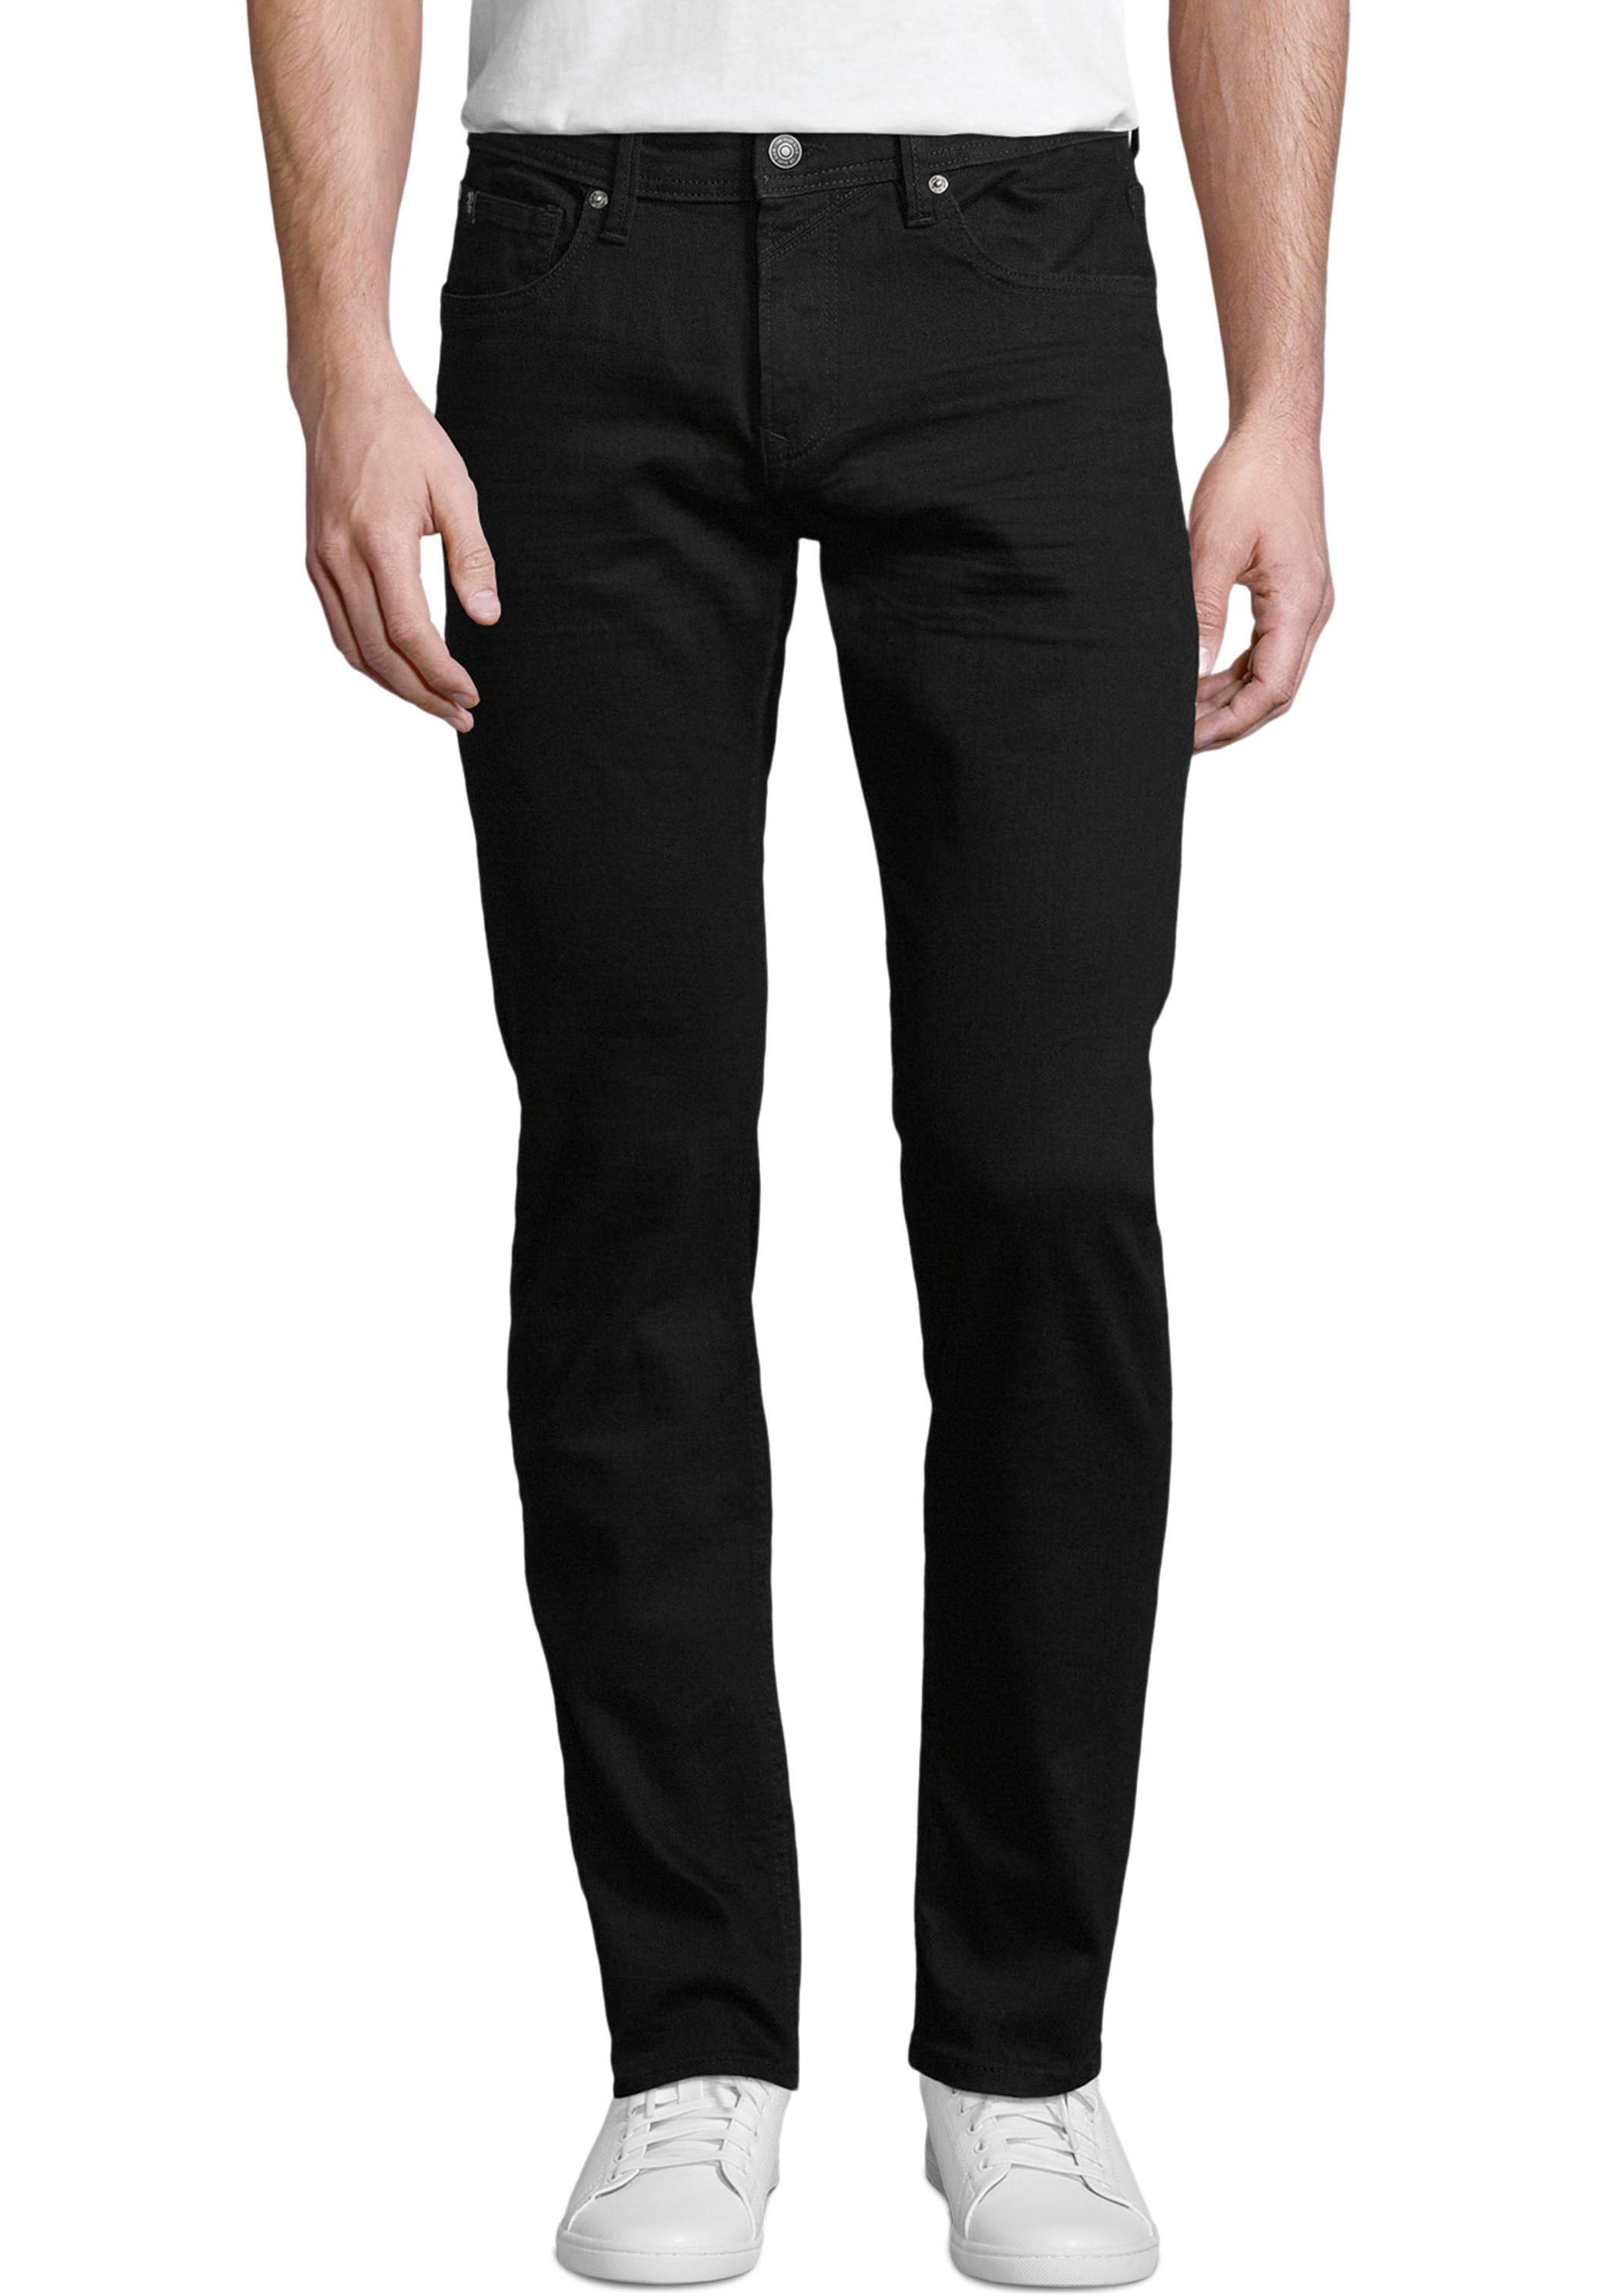 TOM TAILOR Denim Herren Piers Jeans, Schwarz (Black Denim 10240), 32W / 36L